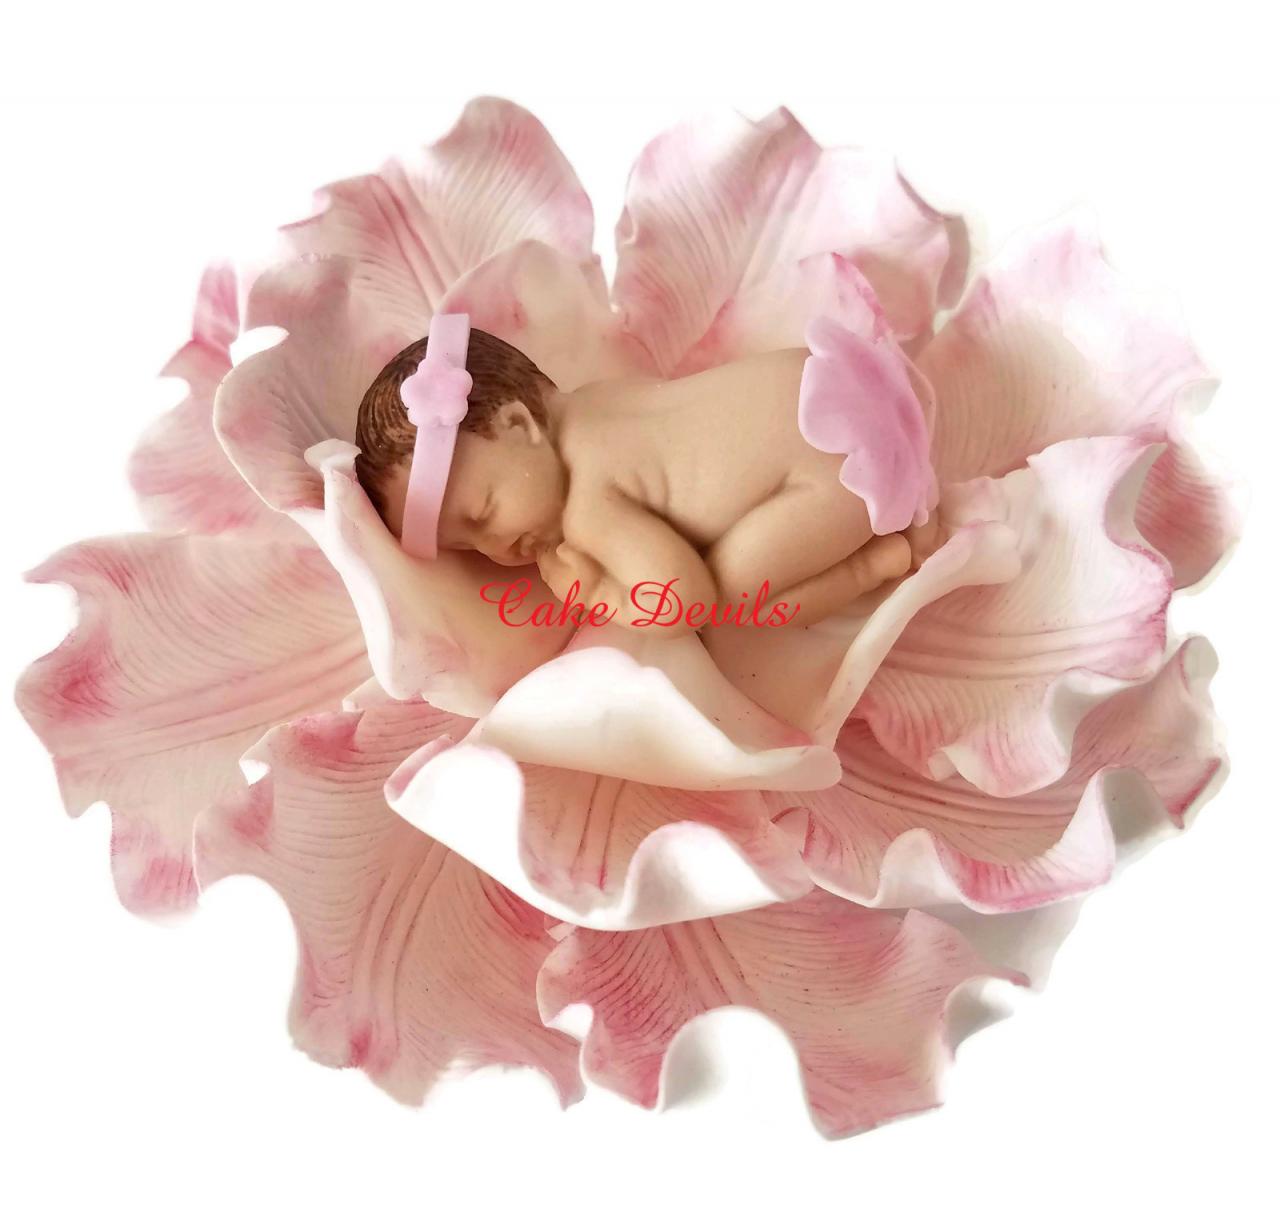 Baby In A Flower Fondant Cake Topper, Handmade Edible Sleeping Baby Girl Shower Cake Decoration, Gumpaste Peony, Rose